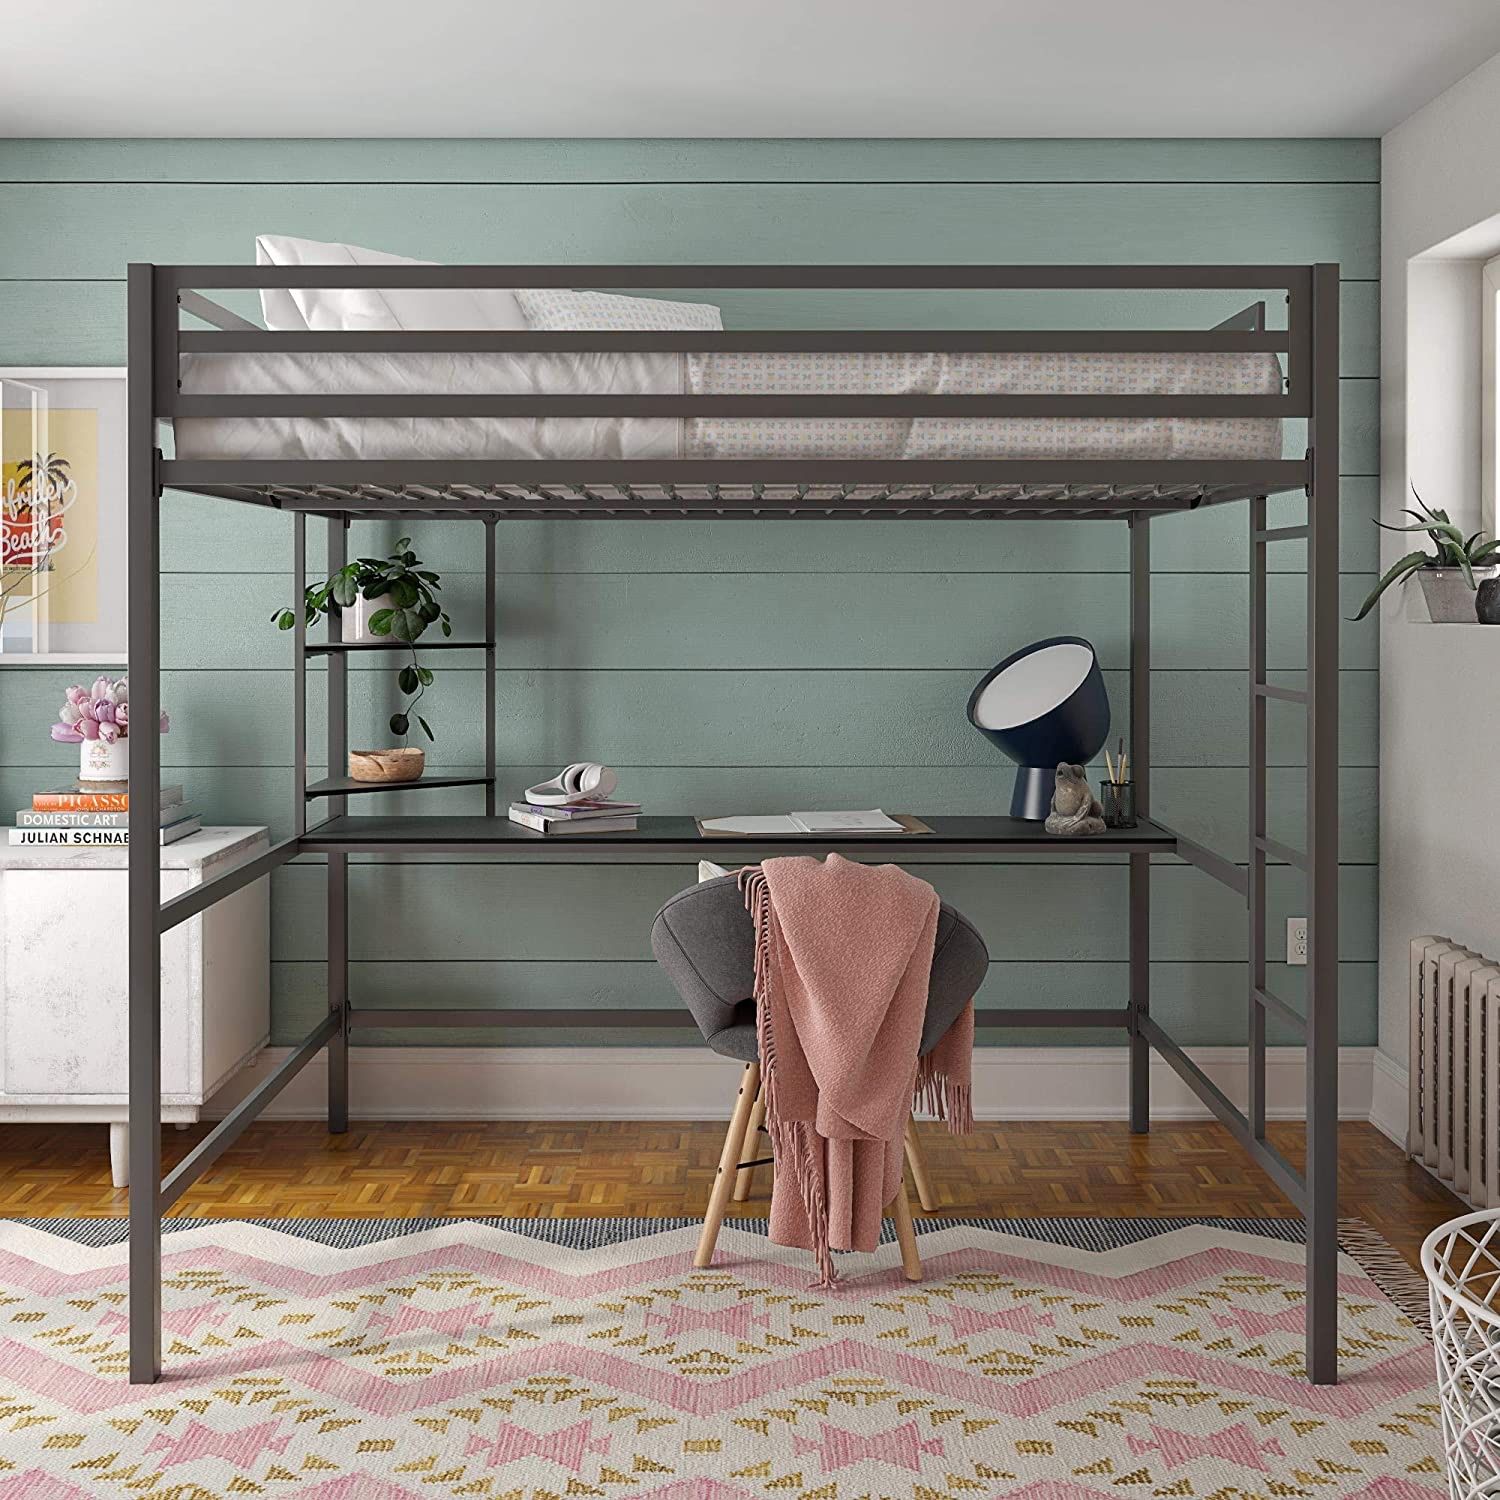 NIB Full Bunk Bed w/ Desk and Shelves